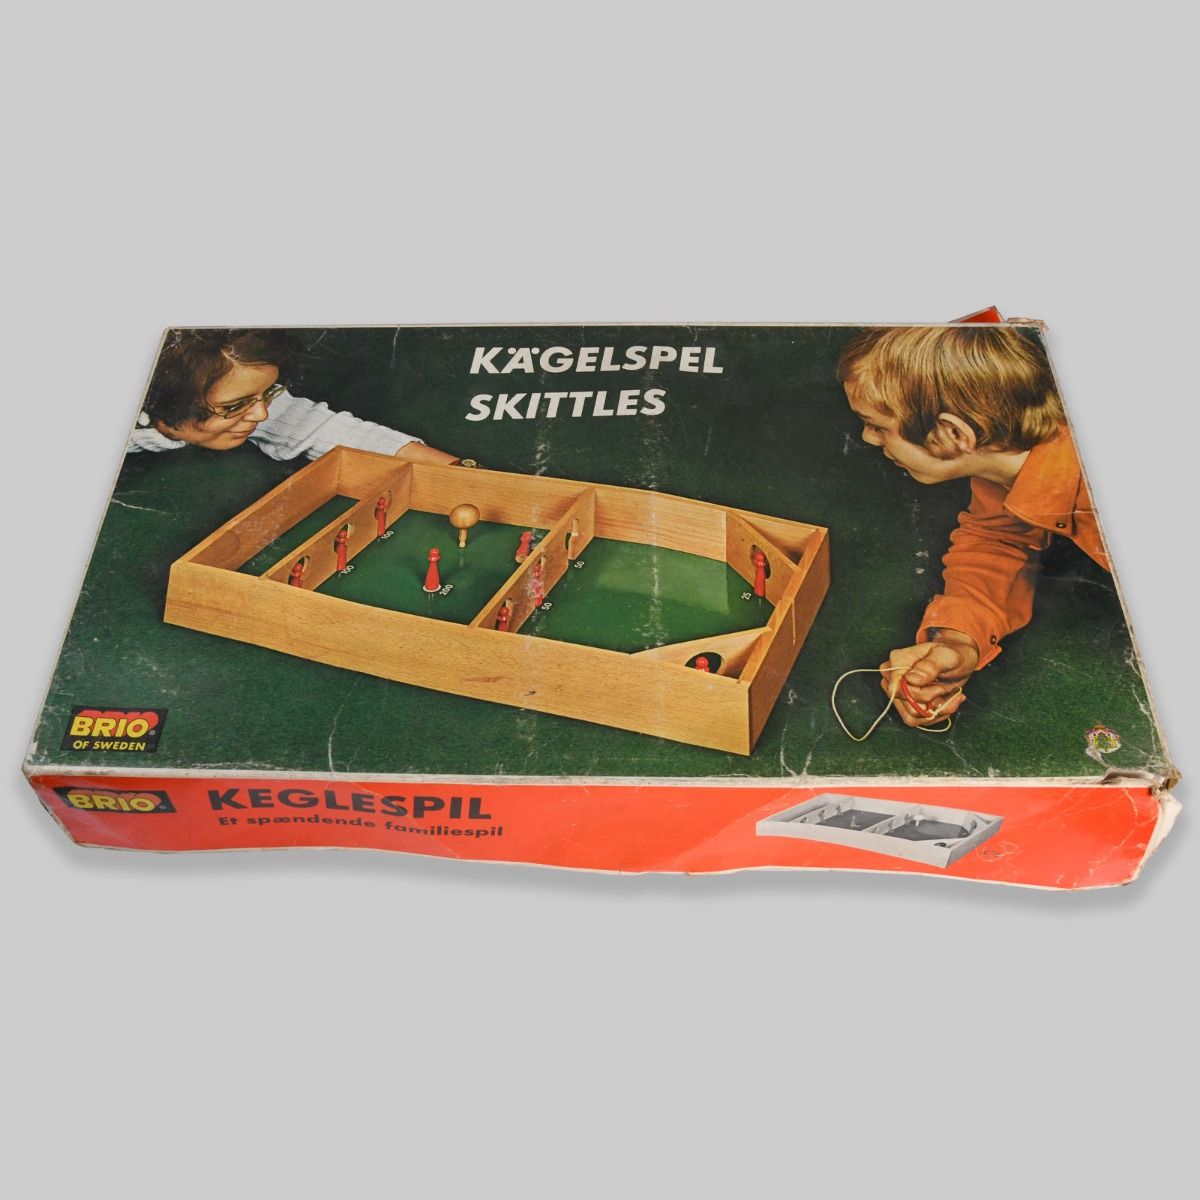 'Kagelspel Skittles' 1971 Brio Wooden Game